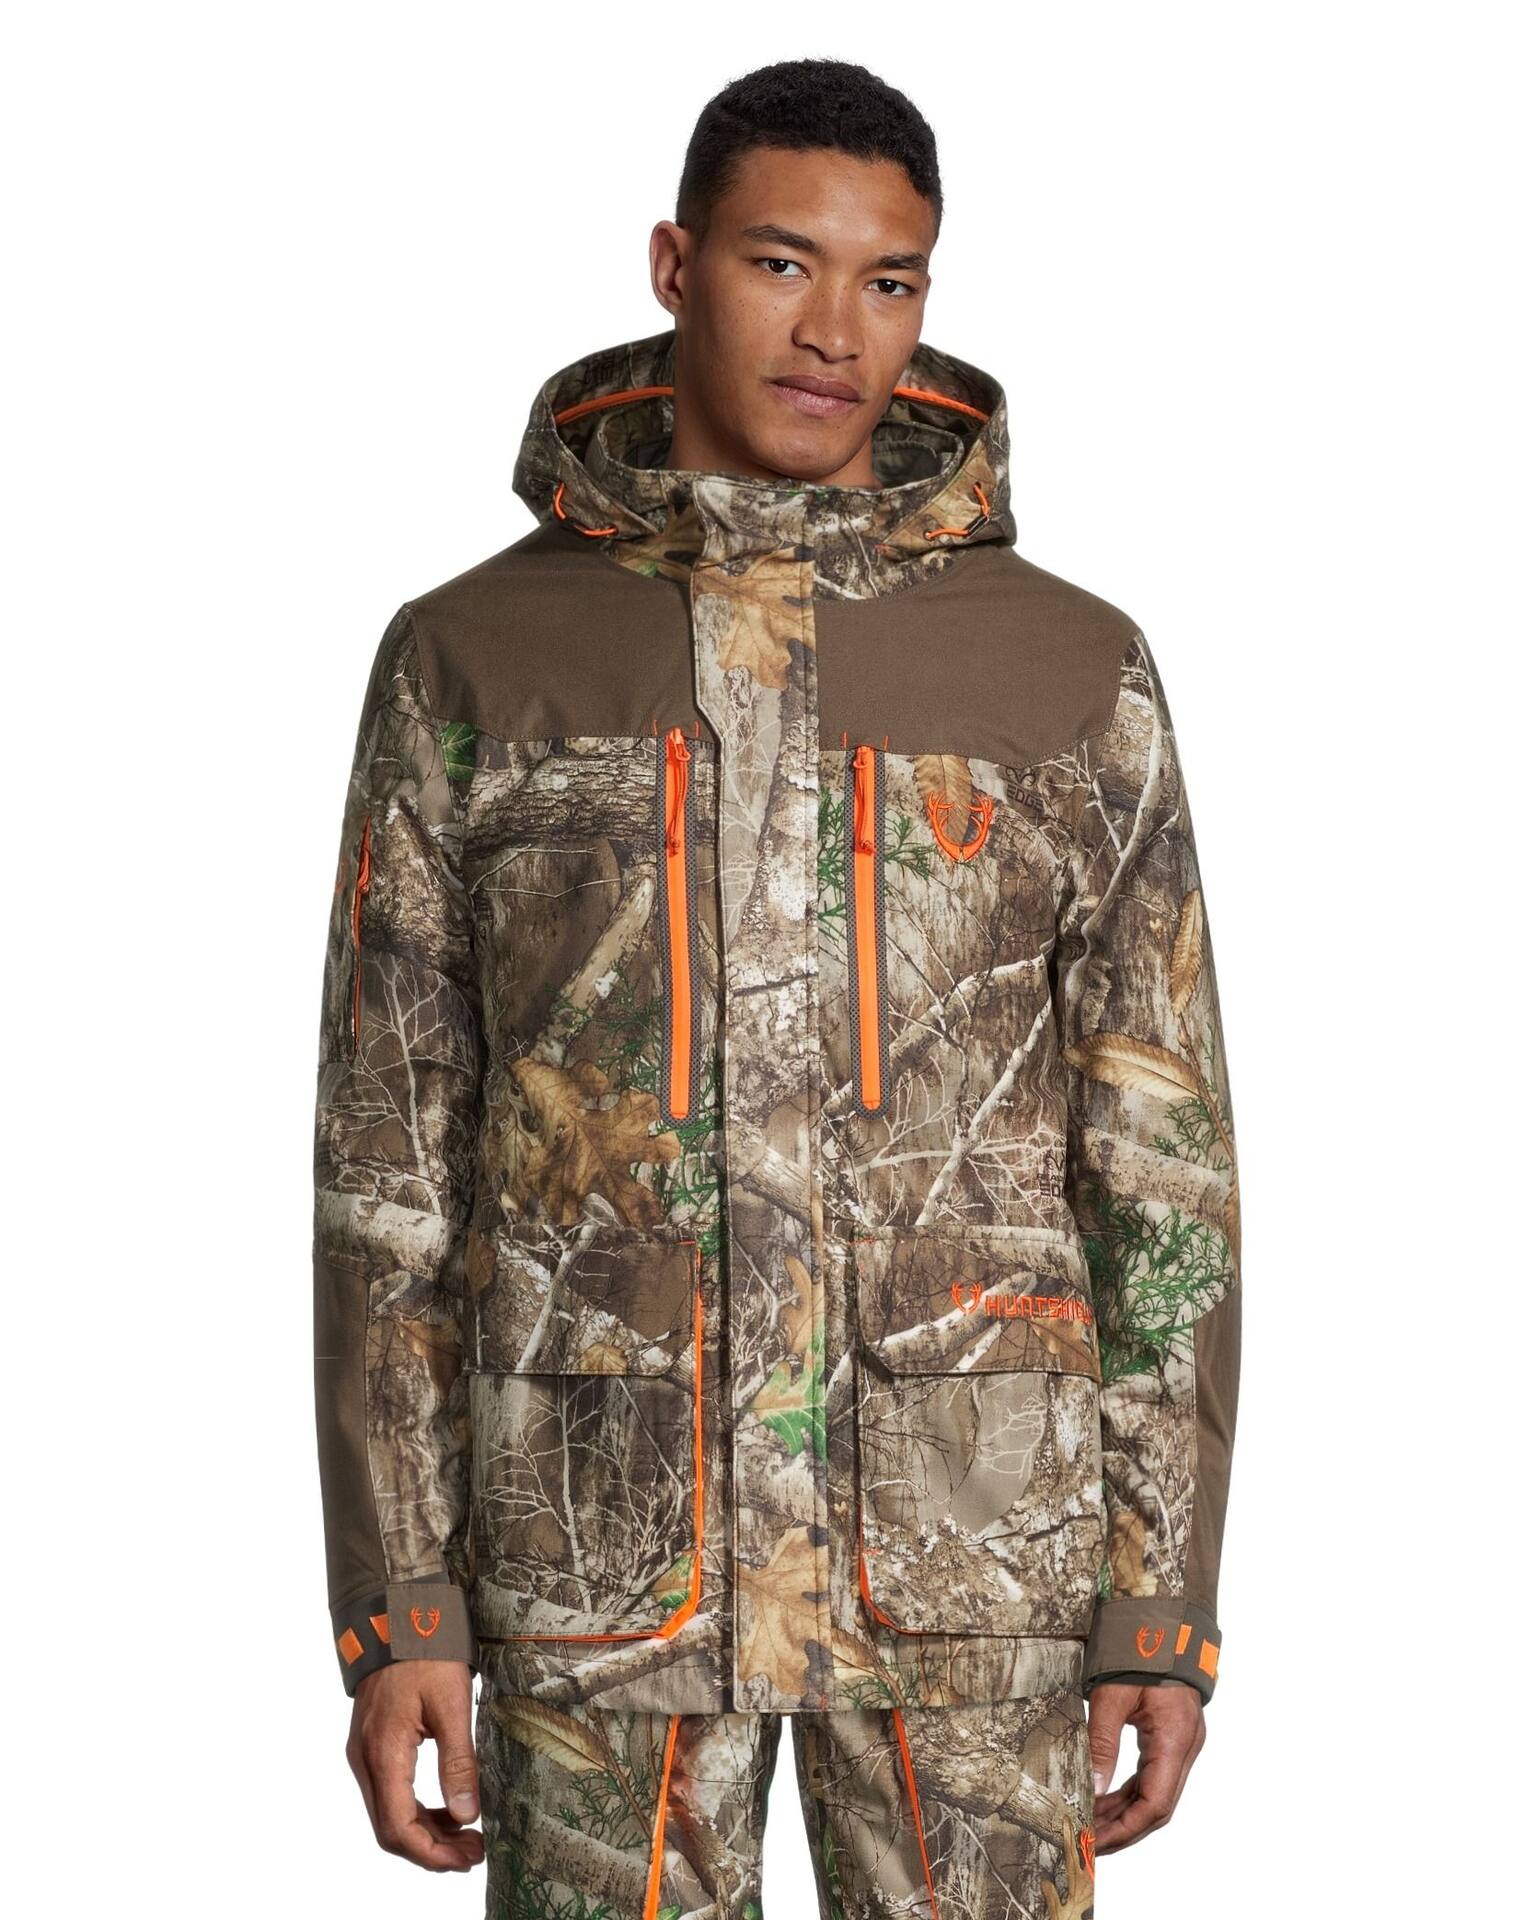 Bolderton Elite Camo Hunting Jacket for Men, 3-in-1 Parka, Waterproof  Insulated Rain Gear, Warm Winter Coat with Fleece Liner, Realtree Edge,  MEDIUM at Amazon Men's Clothing store